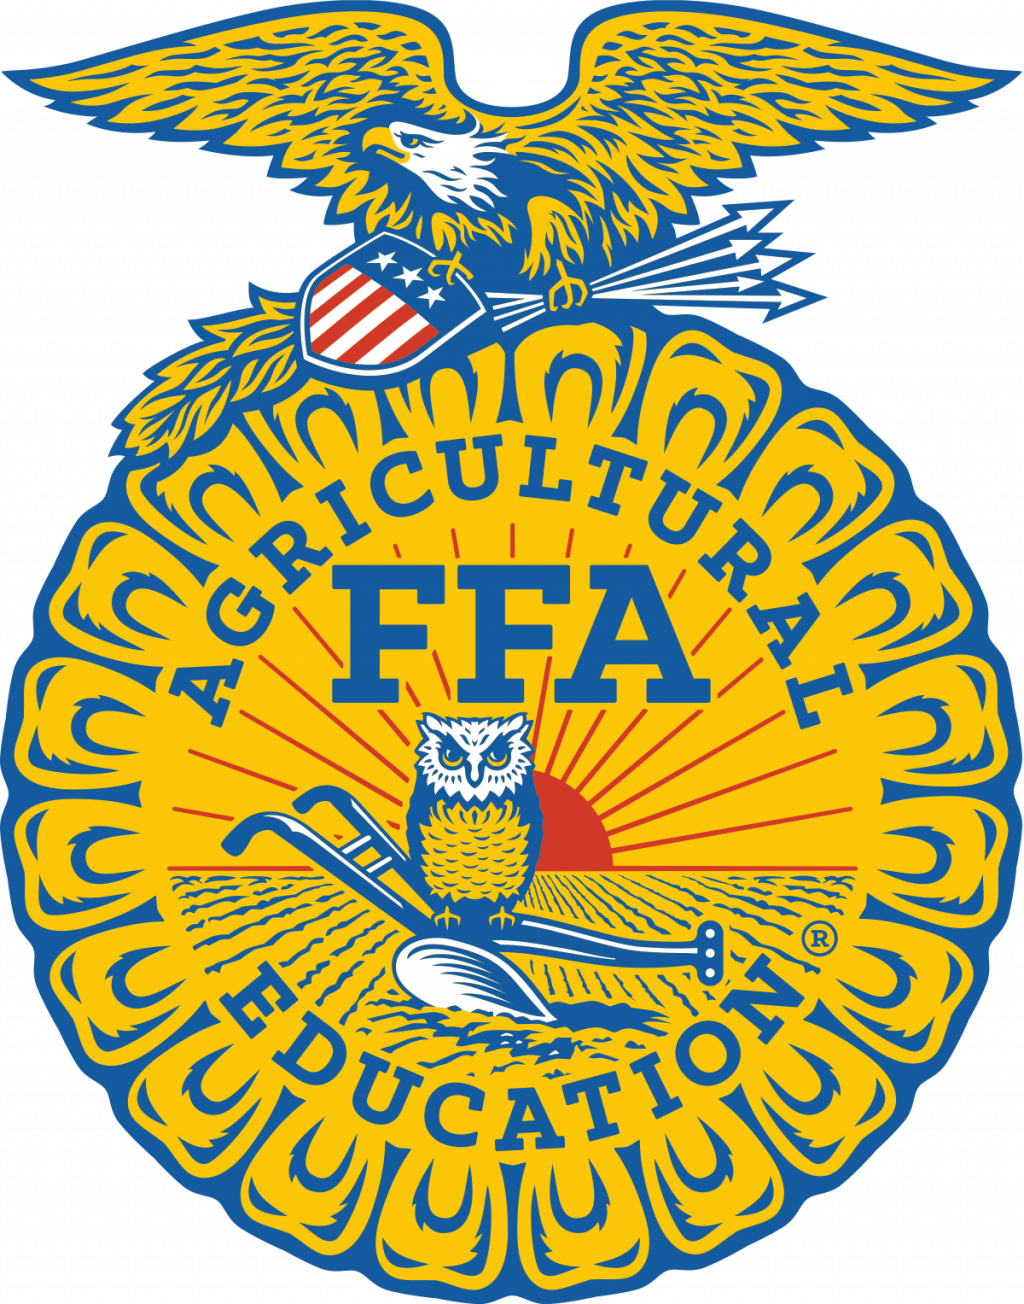 Agriculture / FFA logo